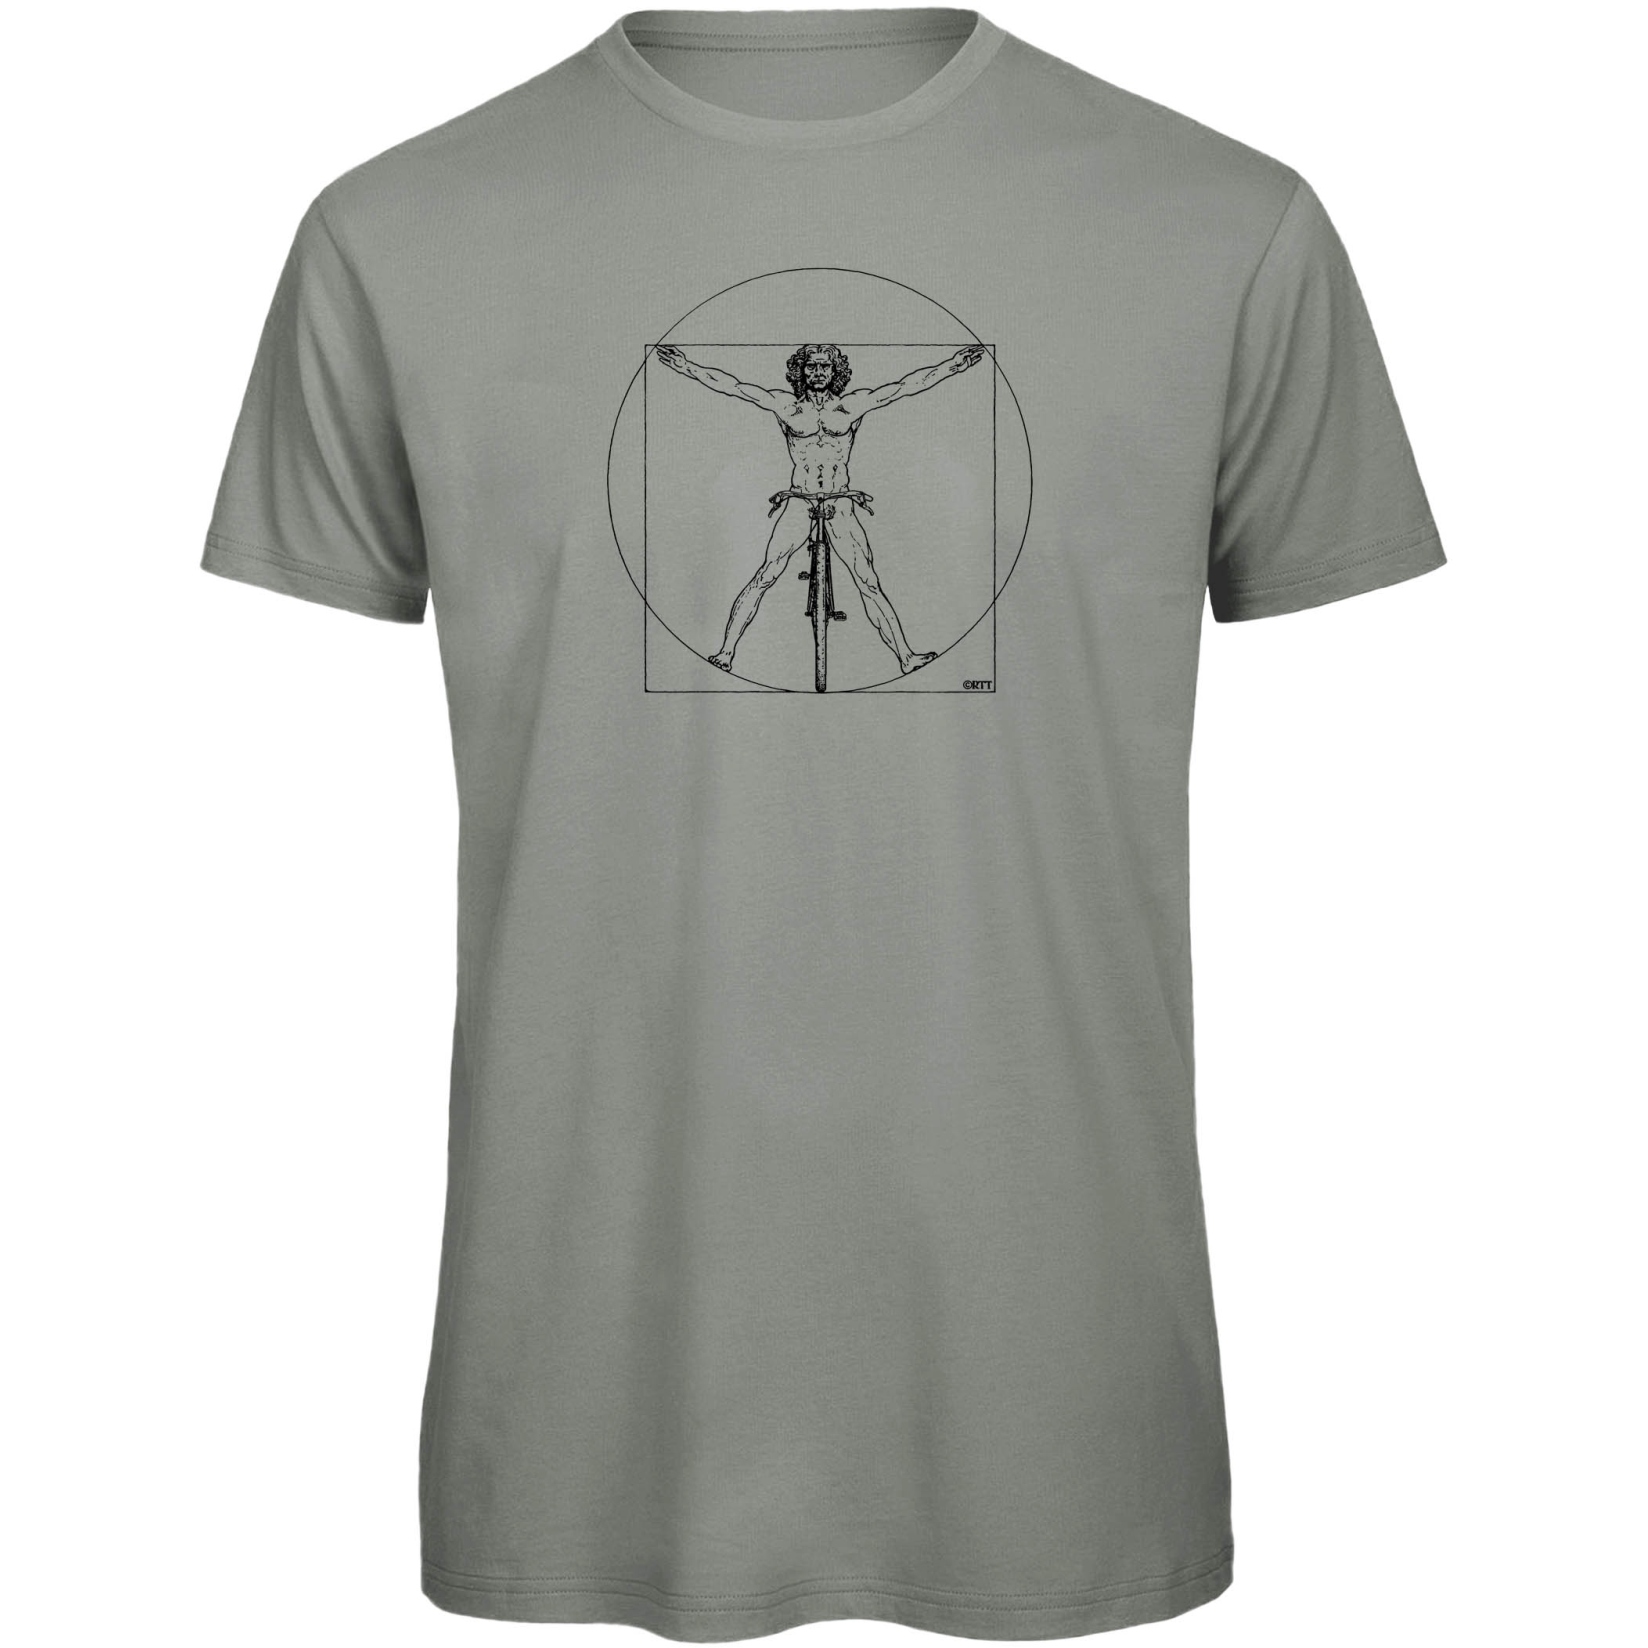 Image of RTTshirts Bike T-Shirt DaVinci - light grey